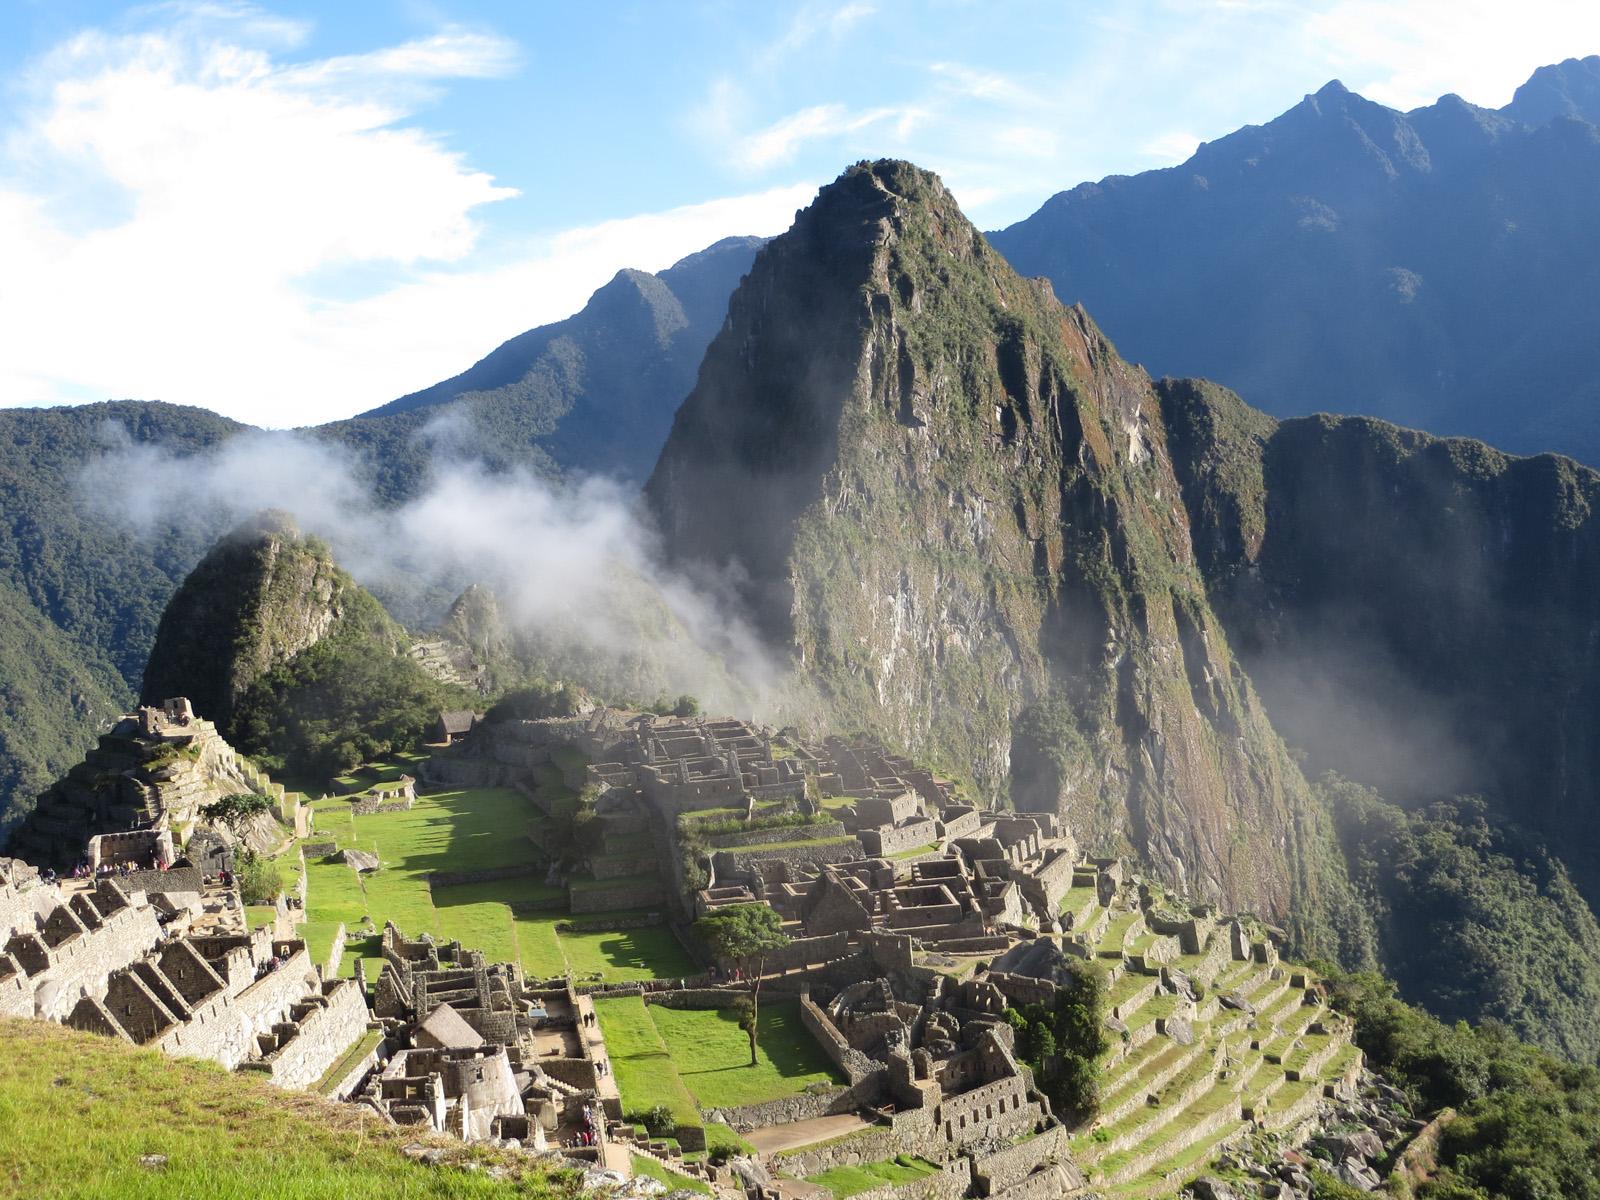 Basic DO's and DON'Ts when visiting Machu Picchu